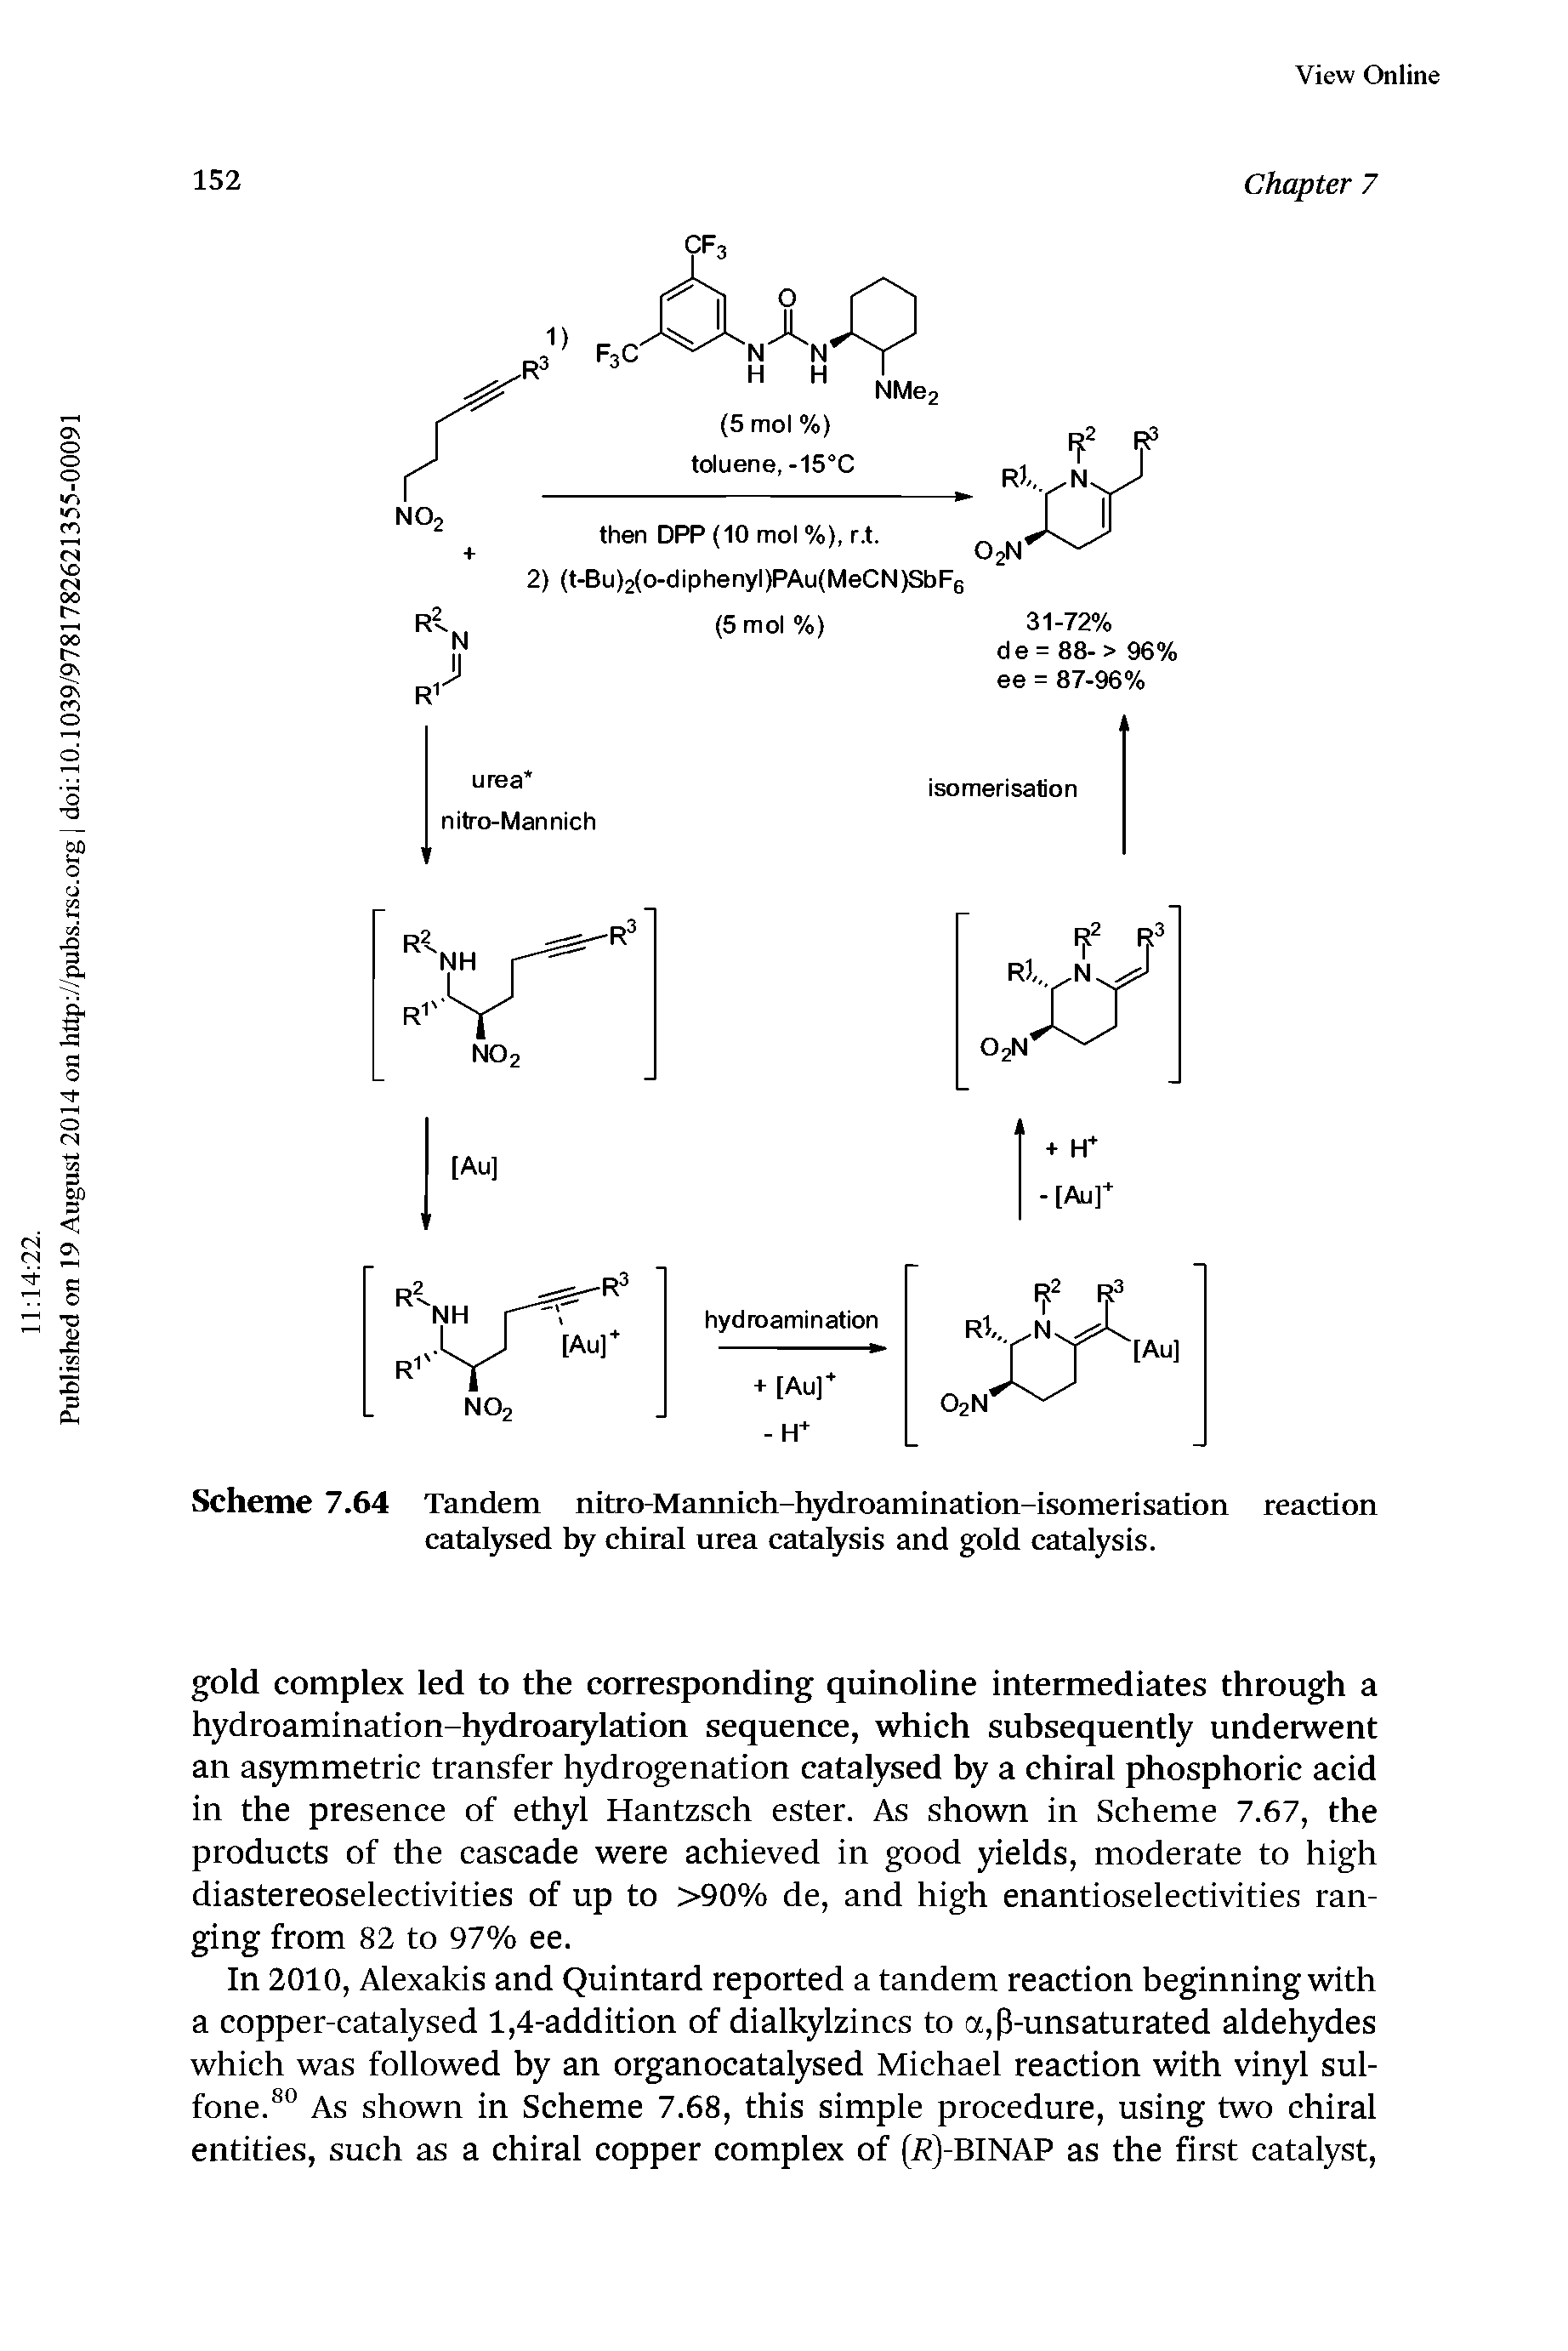 Scheme 7.64 Tandem nitro-Mannich-hydroamination-isomerisation reaction catalysed by chiral urea catalysis and gold catalysis.